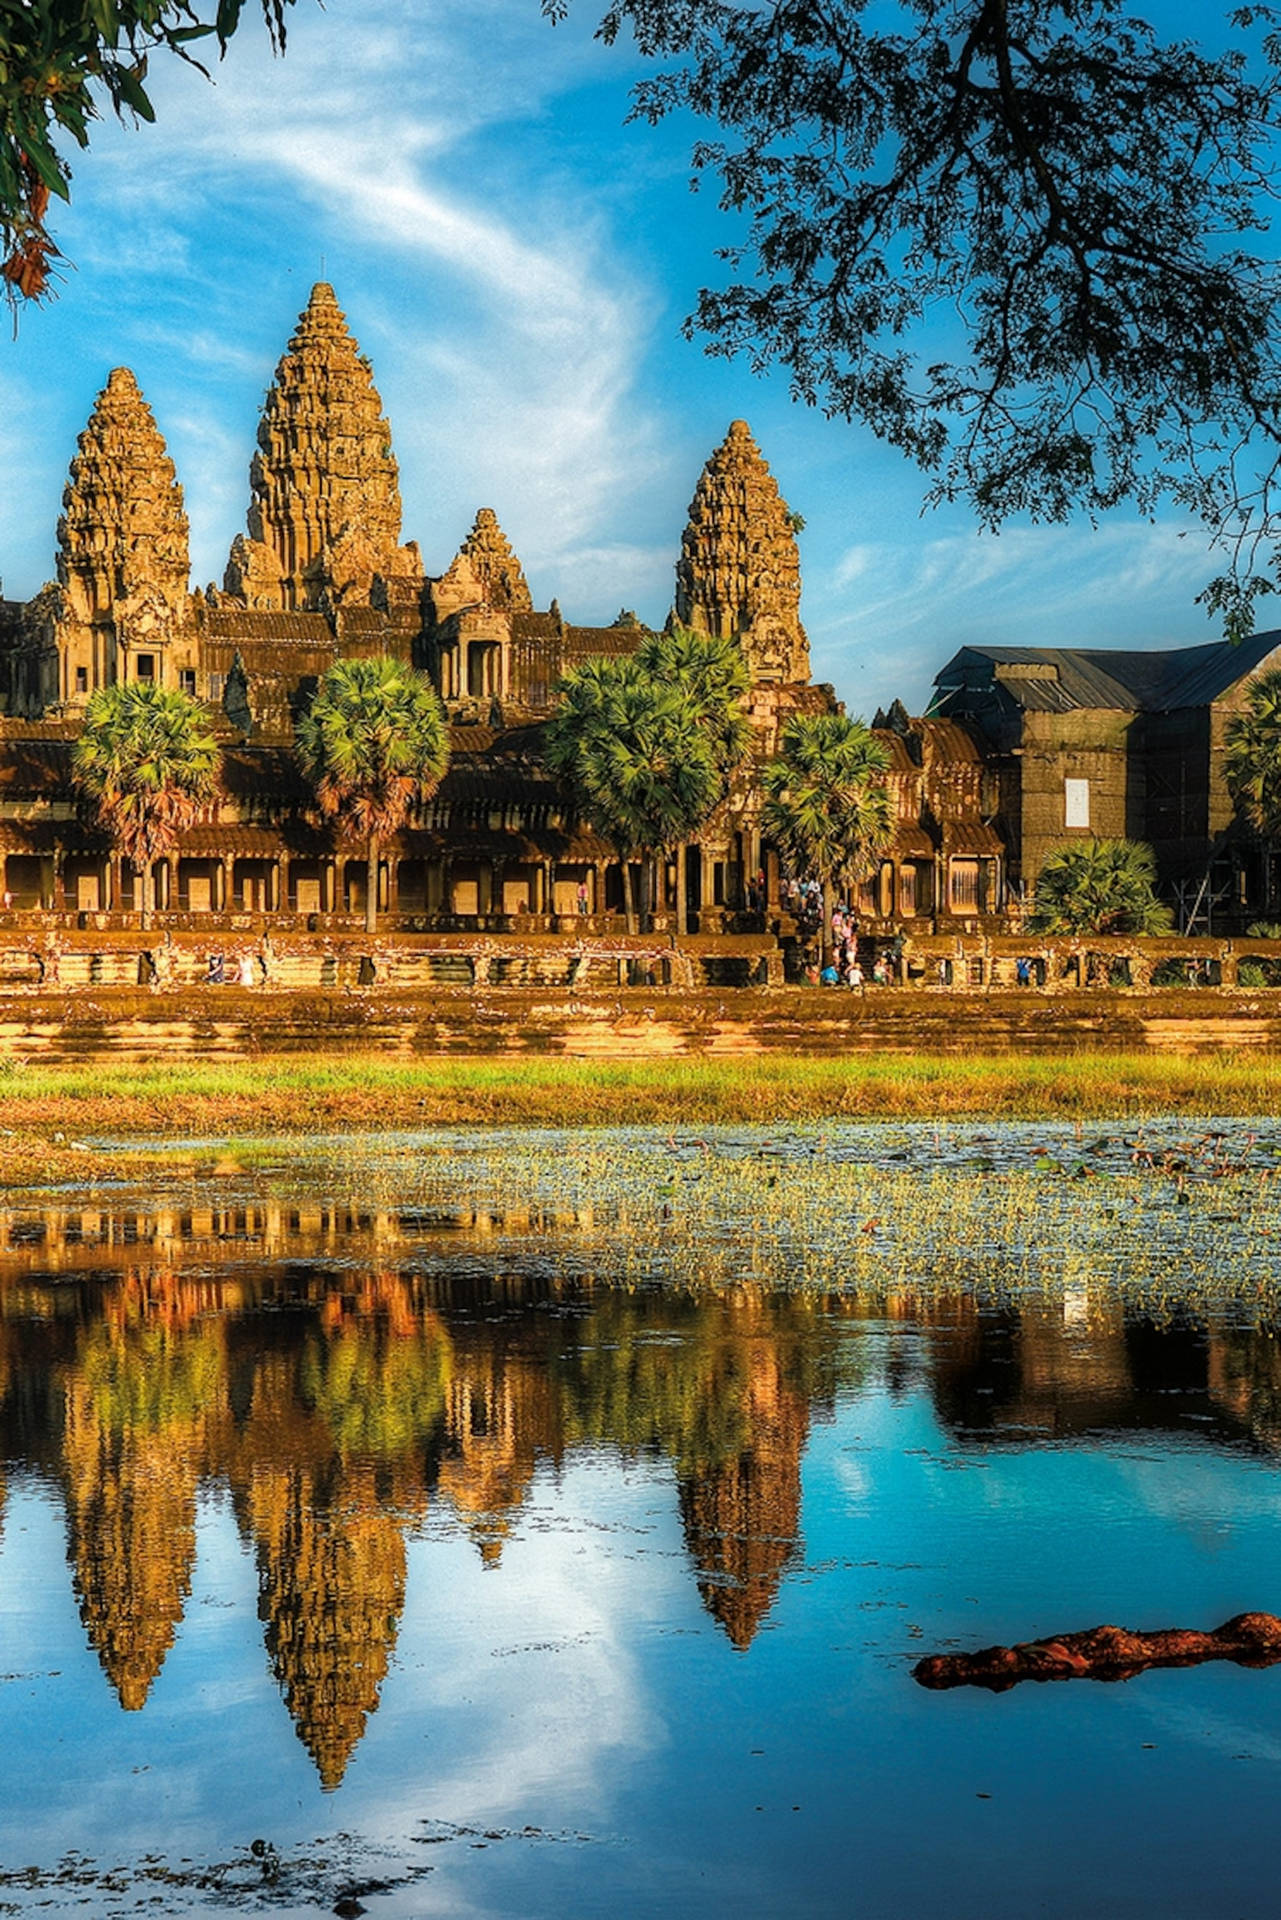 Angkor Wat With Water Reflection